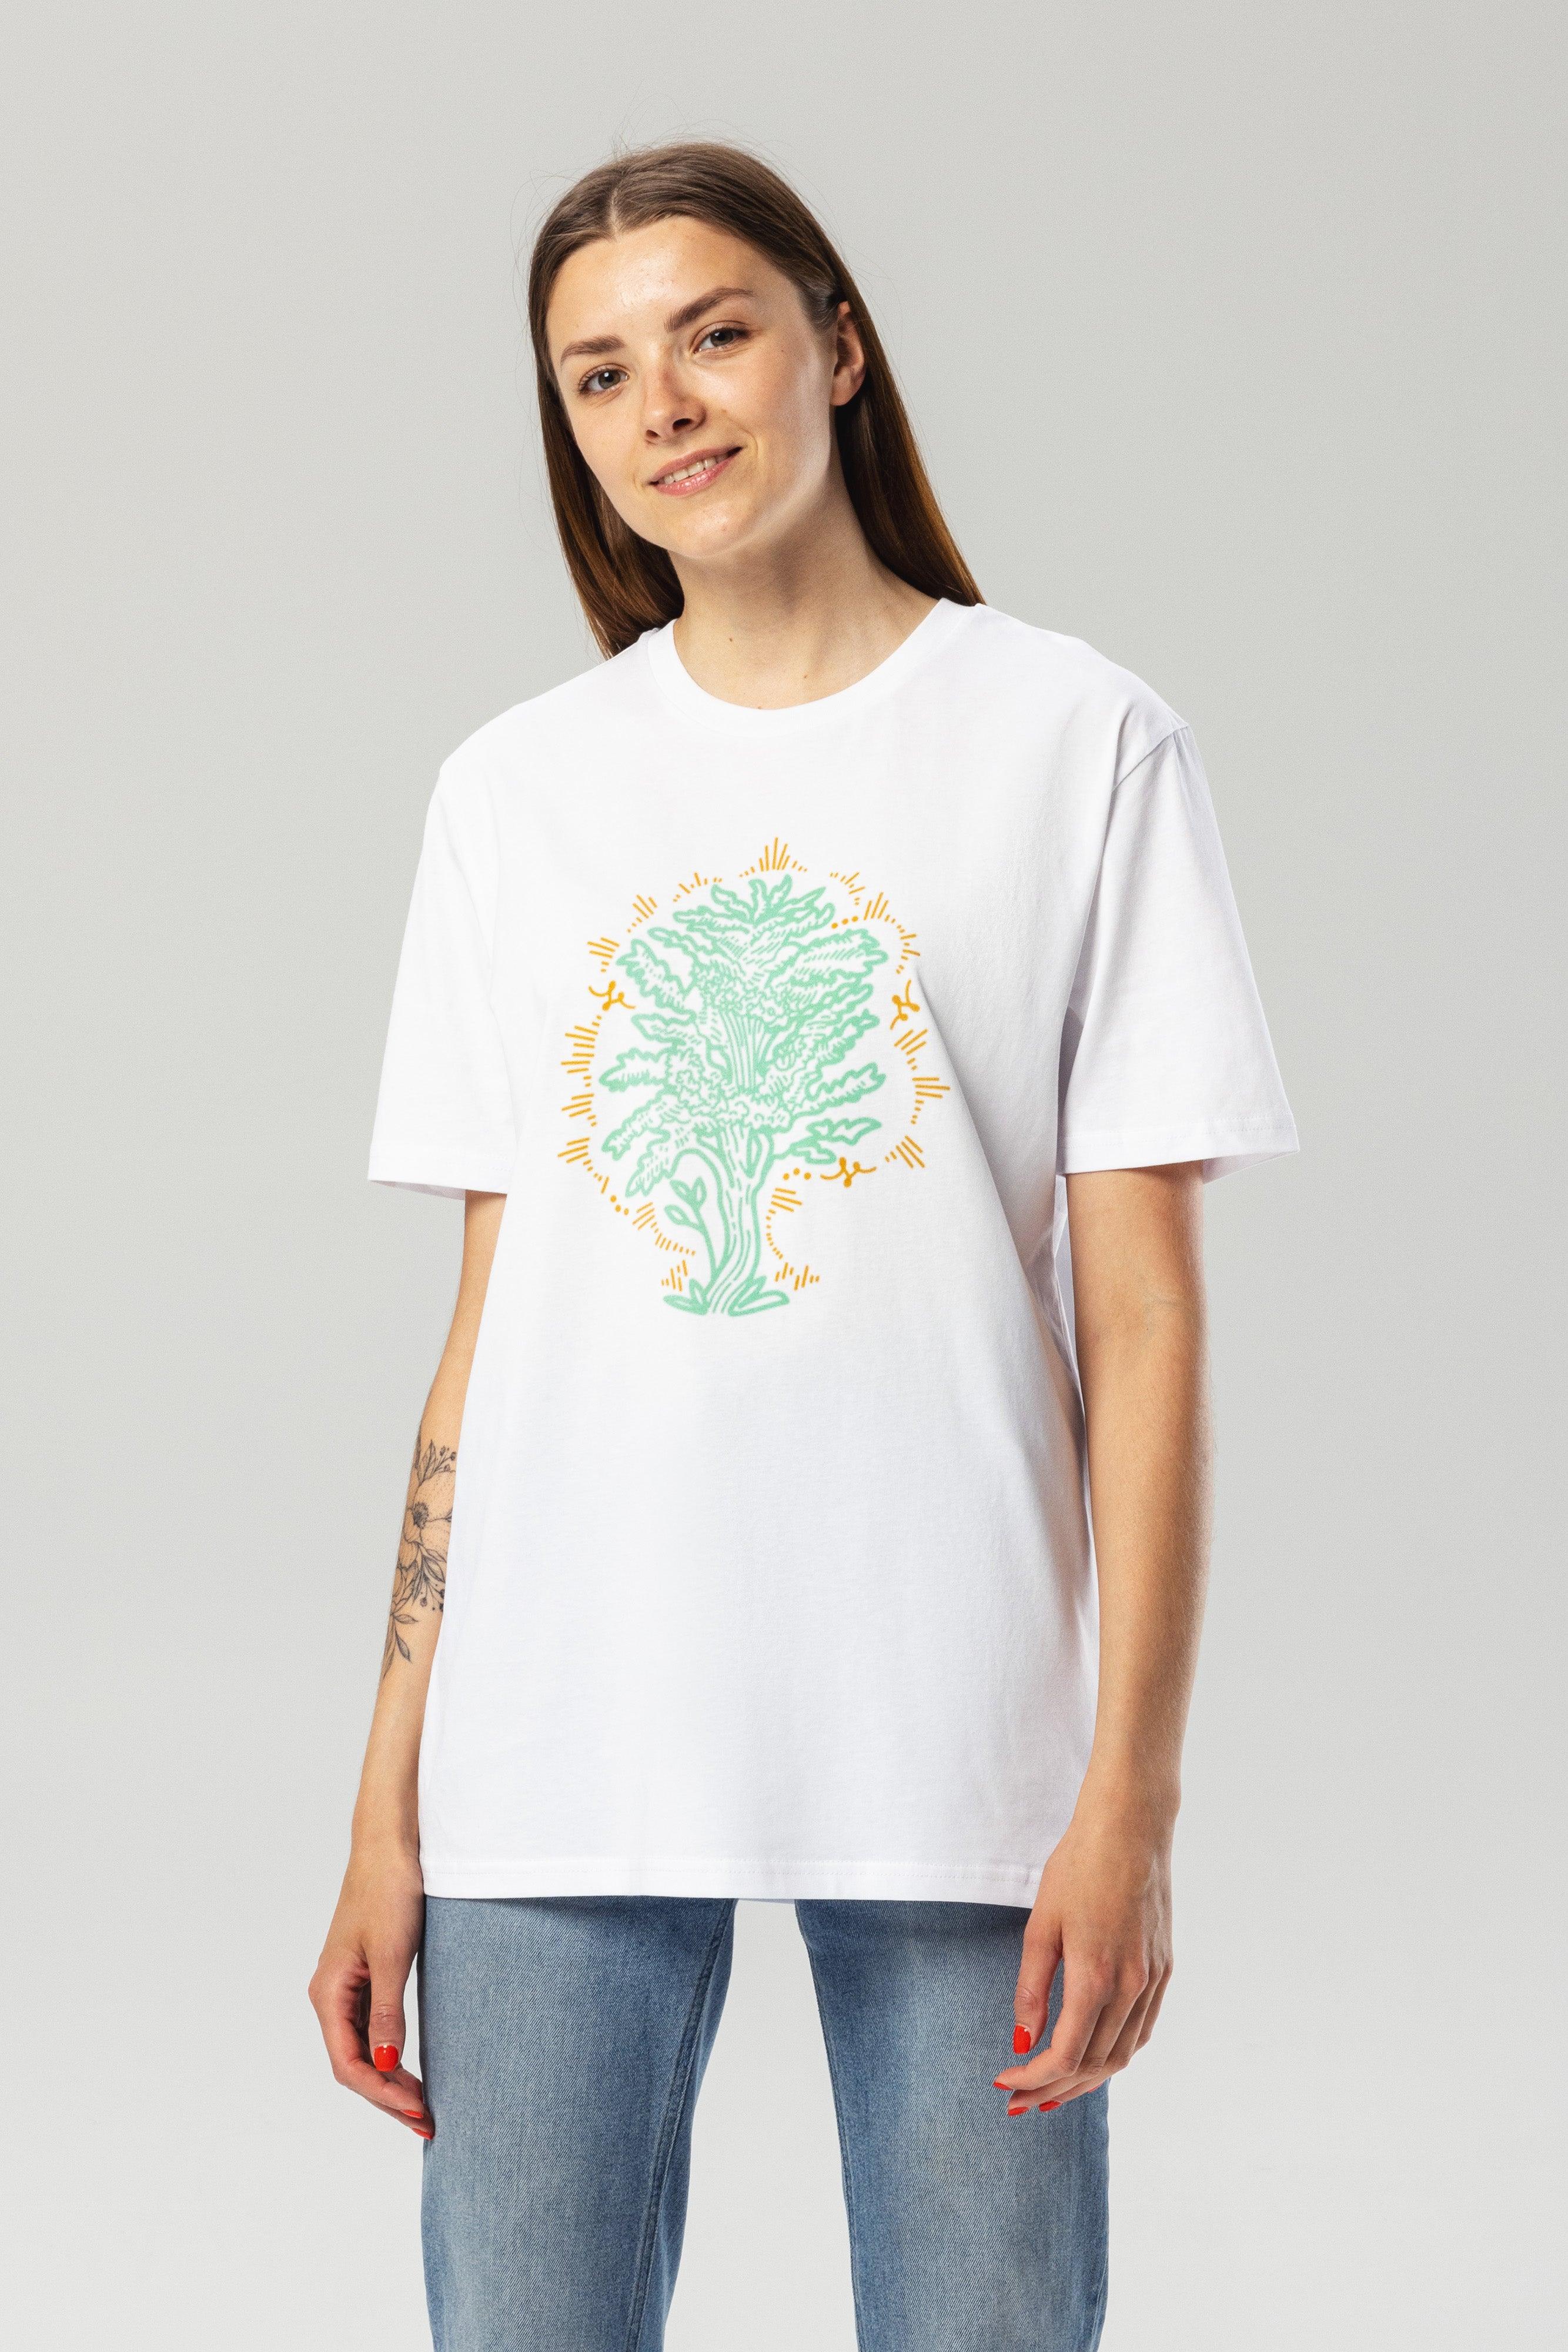 Tree of Life T-Shirt | Shirts & Tops | pitod.com